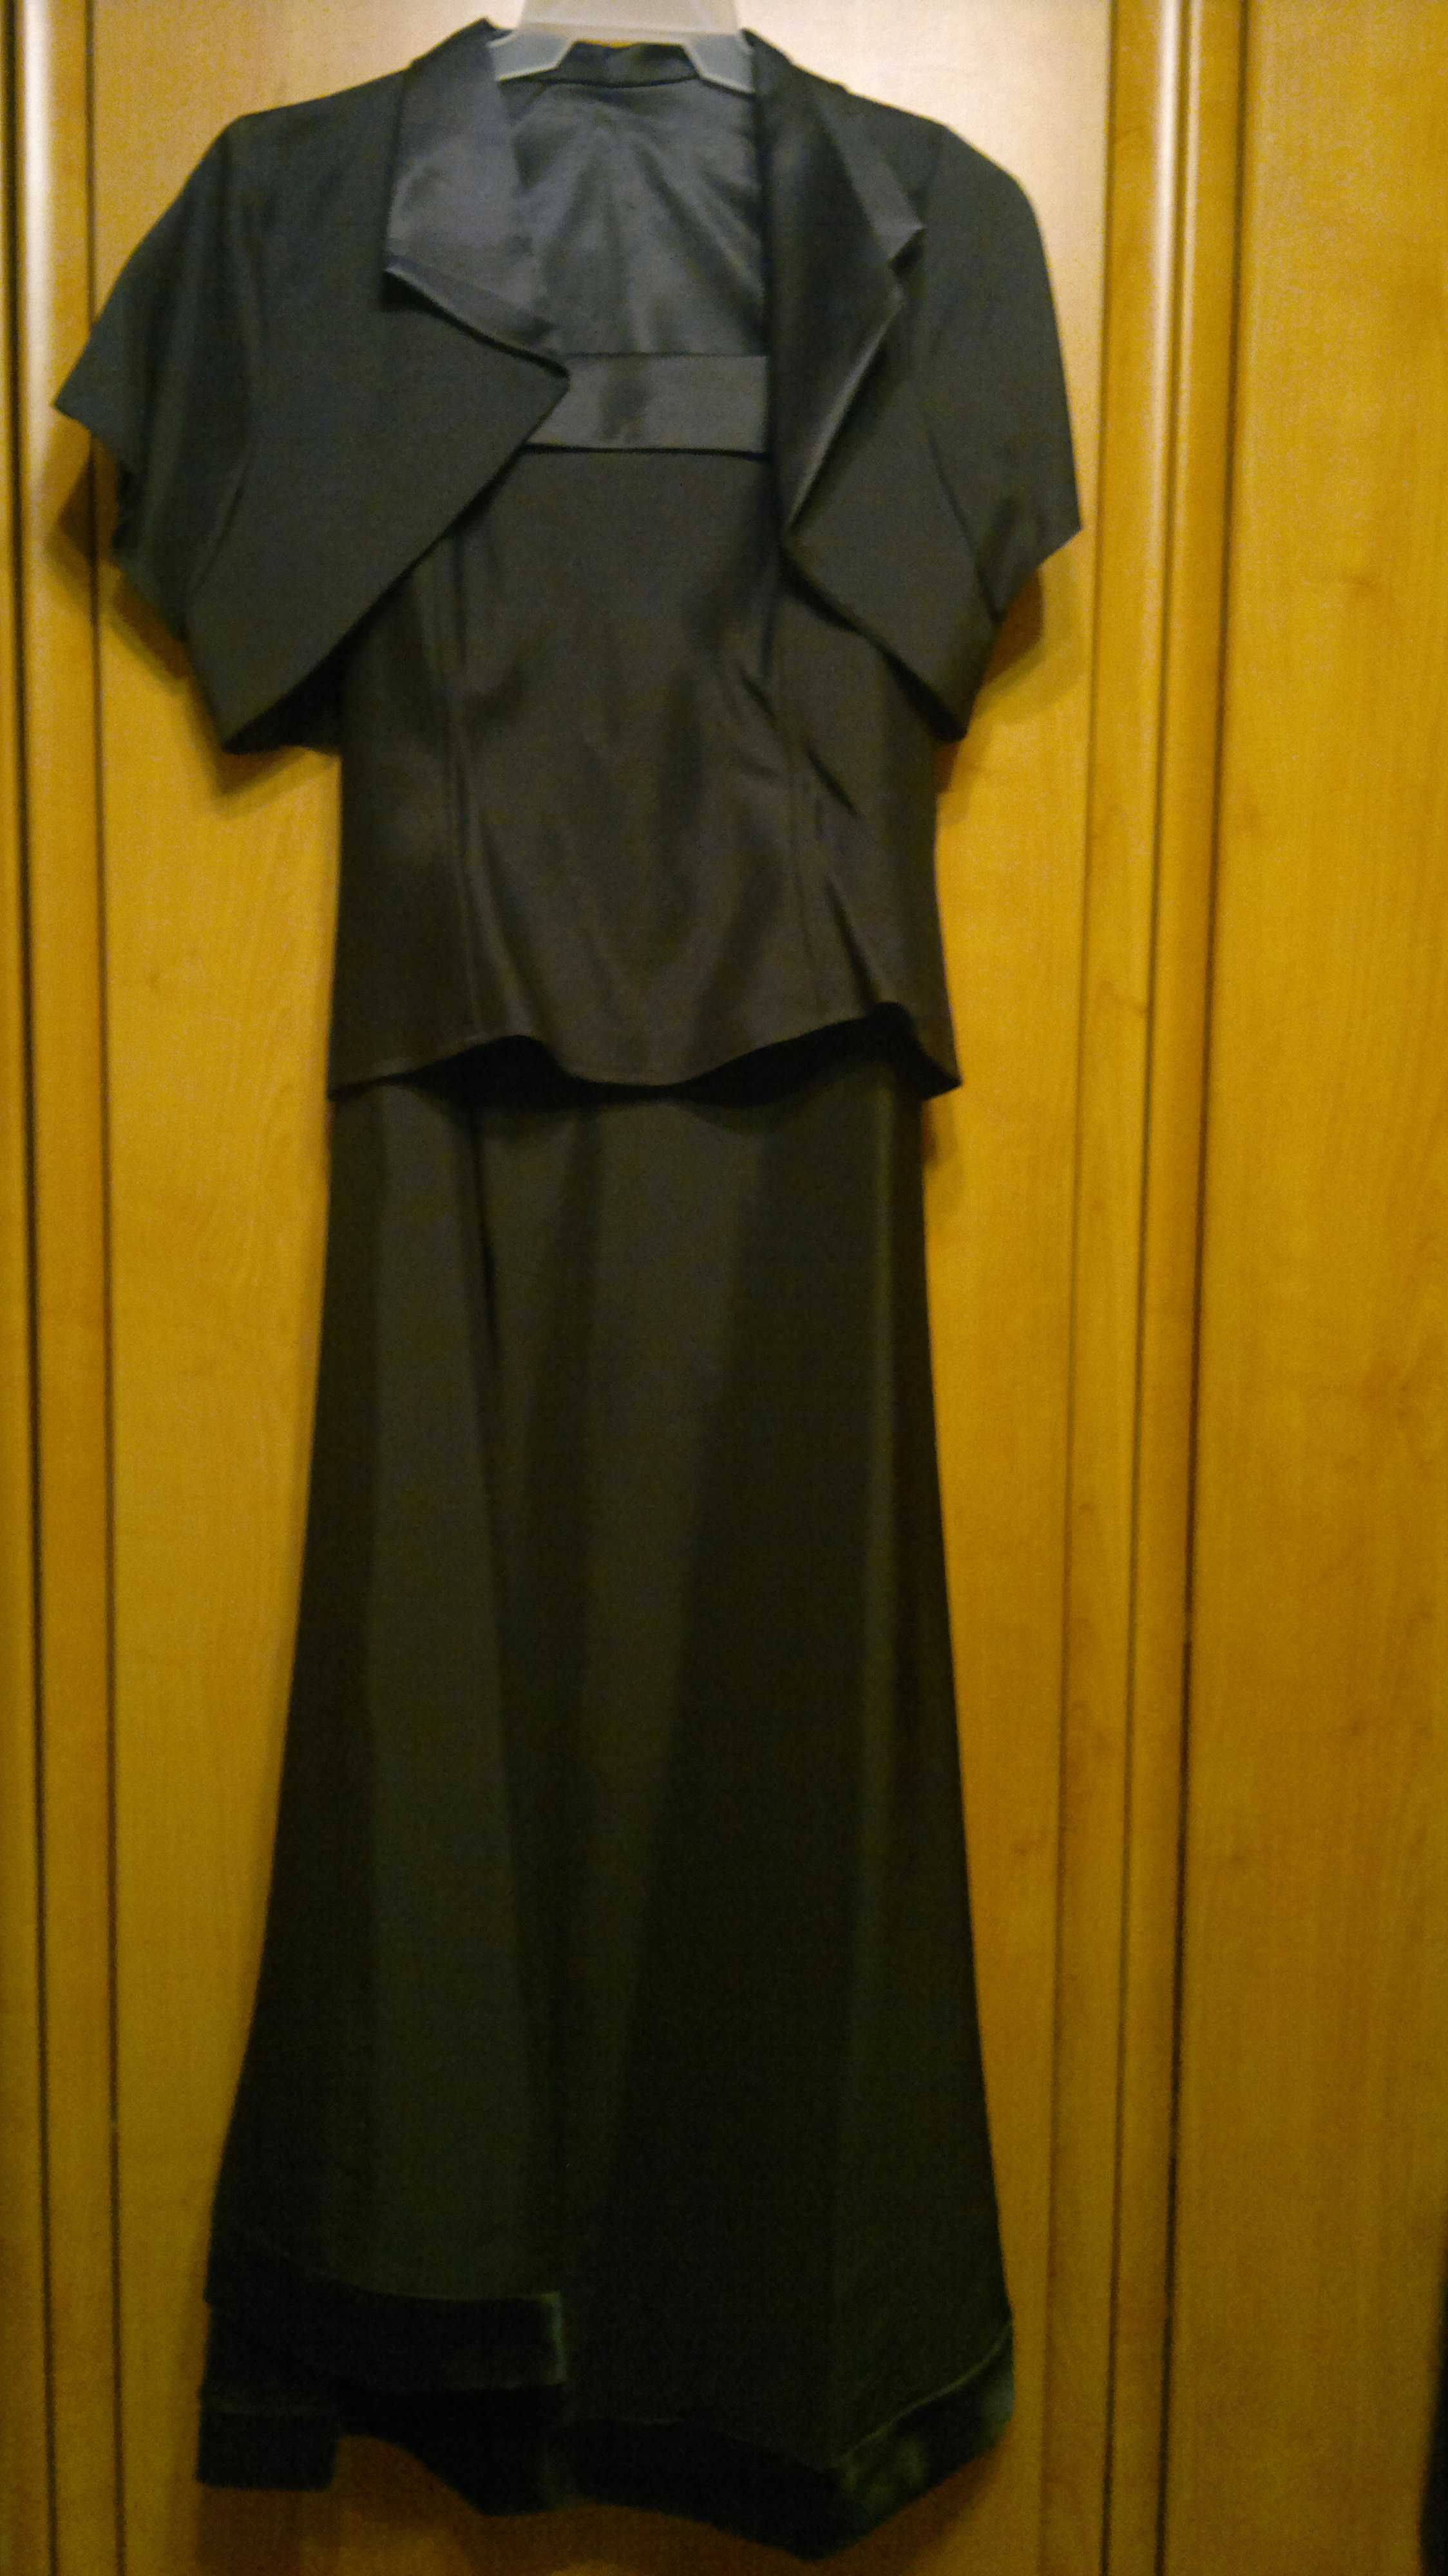 Sukienka czarna balowa studniówkowa 40 L elegancka kobieca do teatru